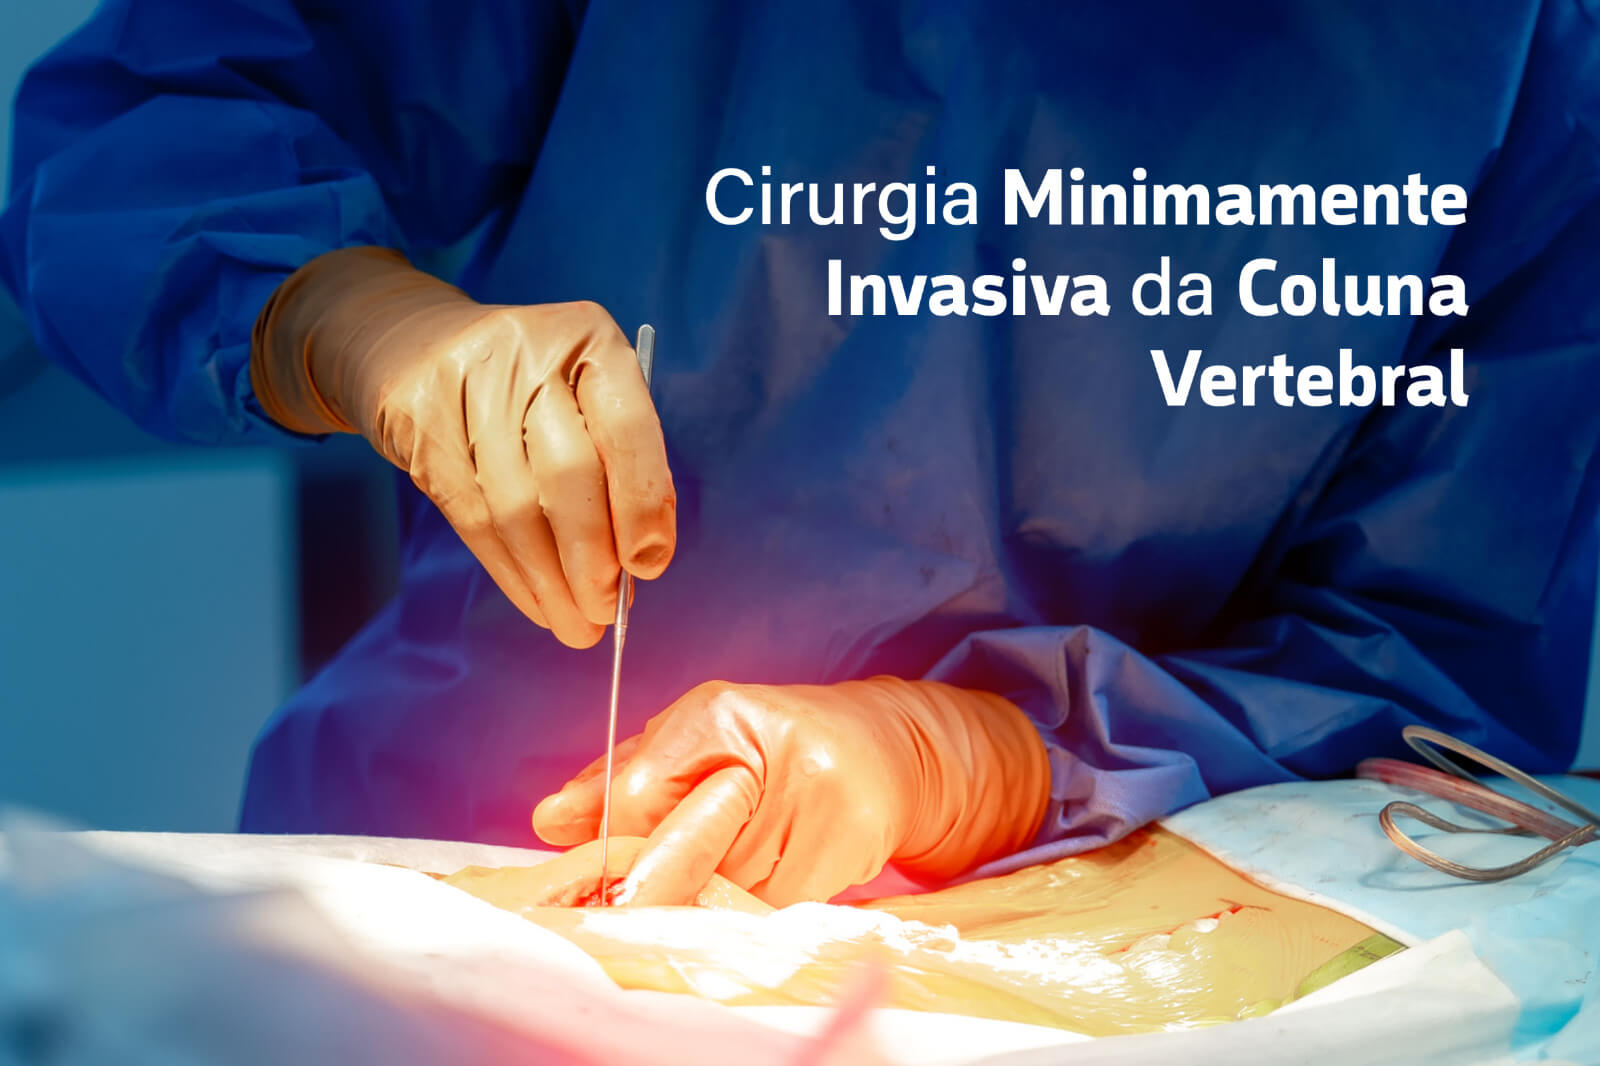  Cirurgia Minimamente Invasiva da Coluna Vertebral 